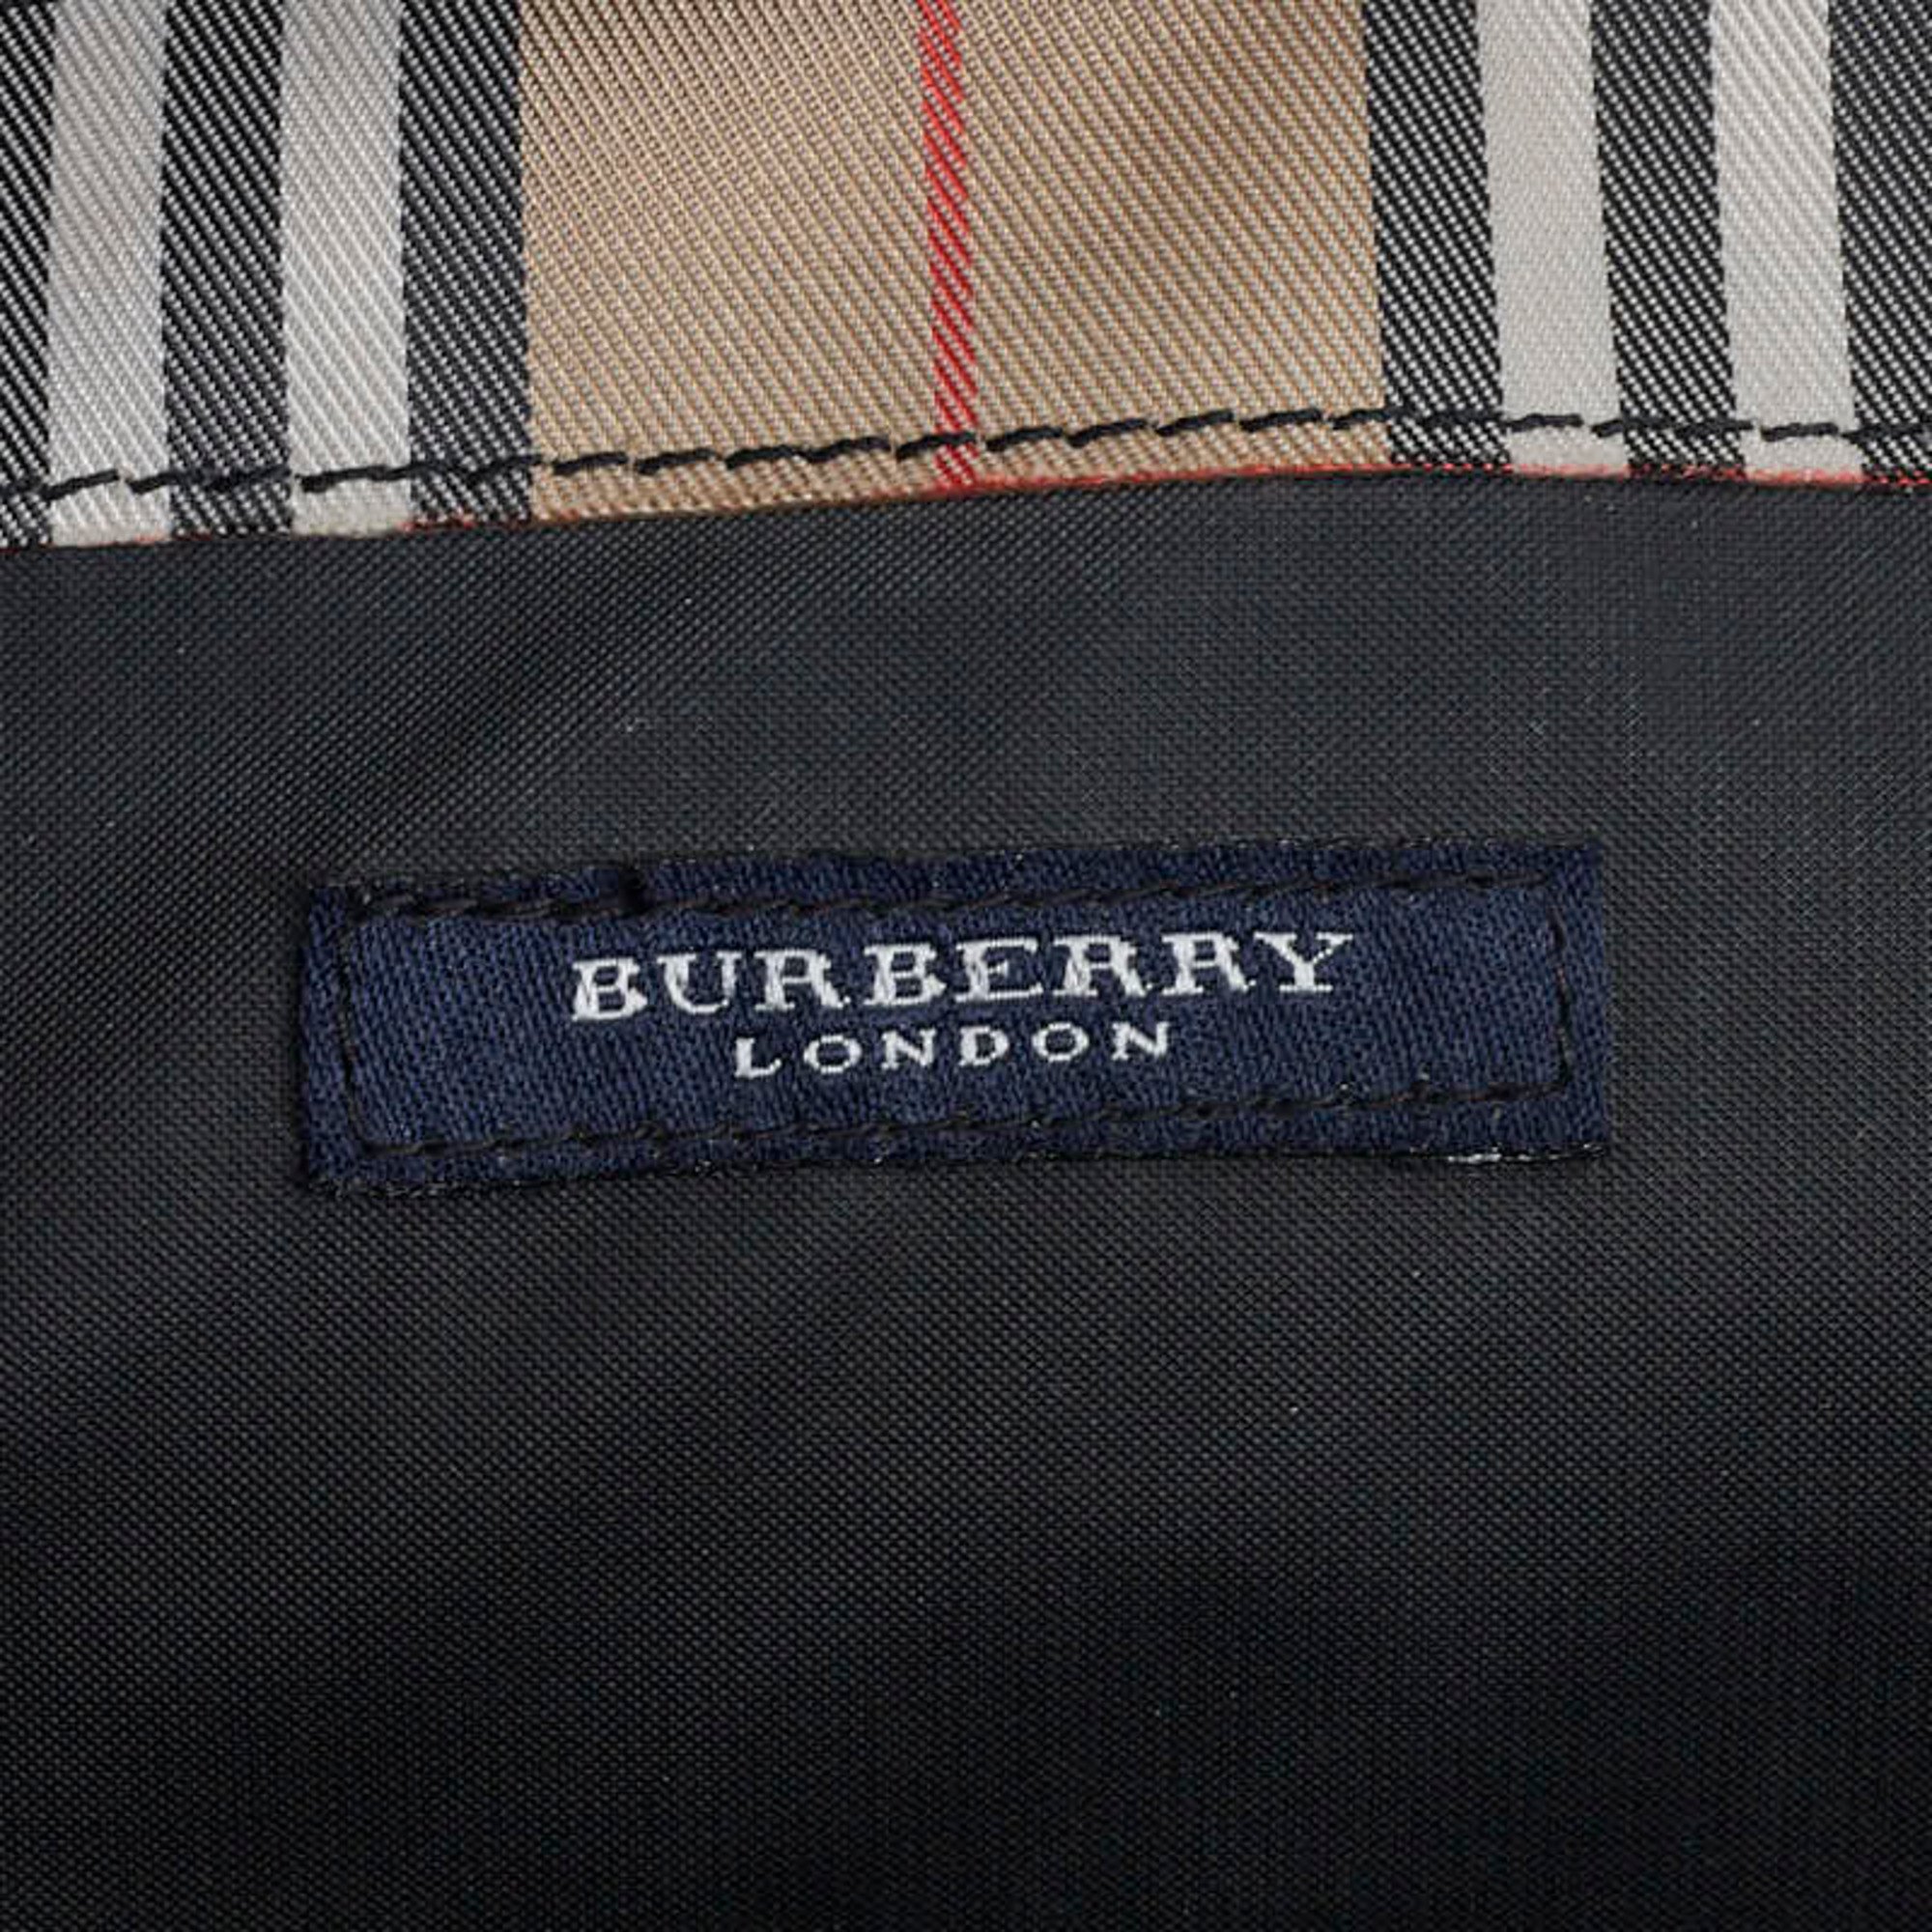 Burberry Nova Check Tote Bag Shoulder Beige Nylon Leather Women's BURBERRY